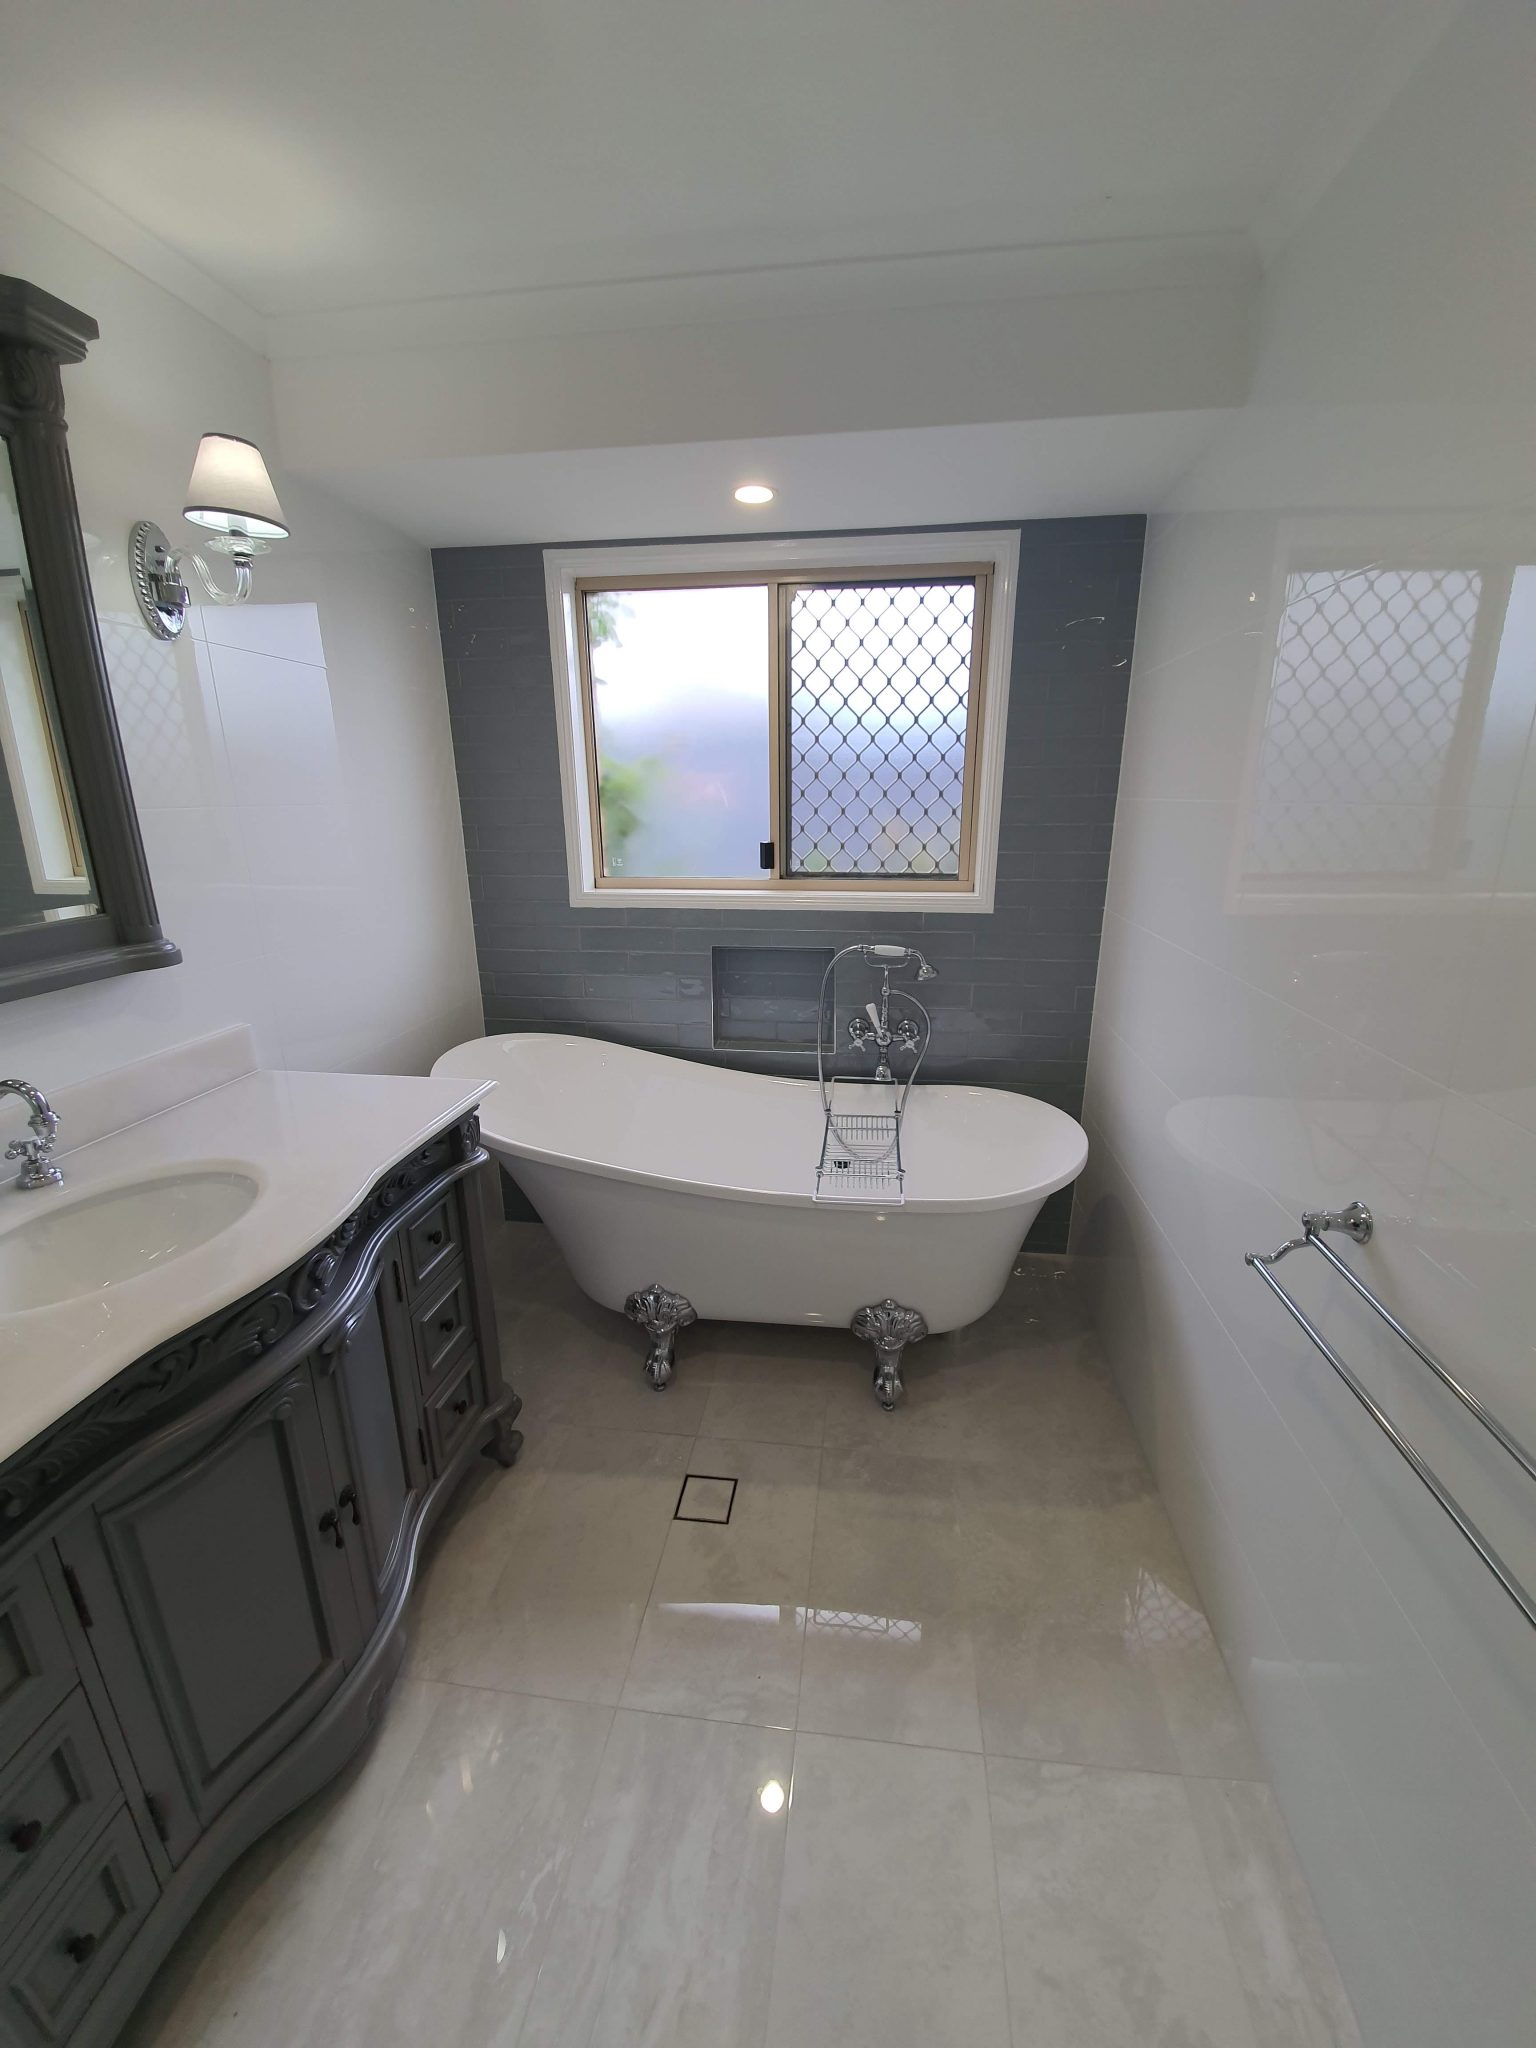 Coomera Bathroom renovations